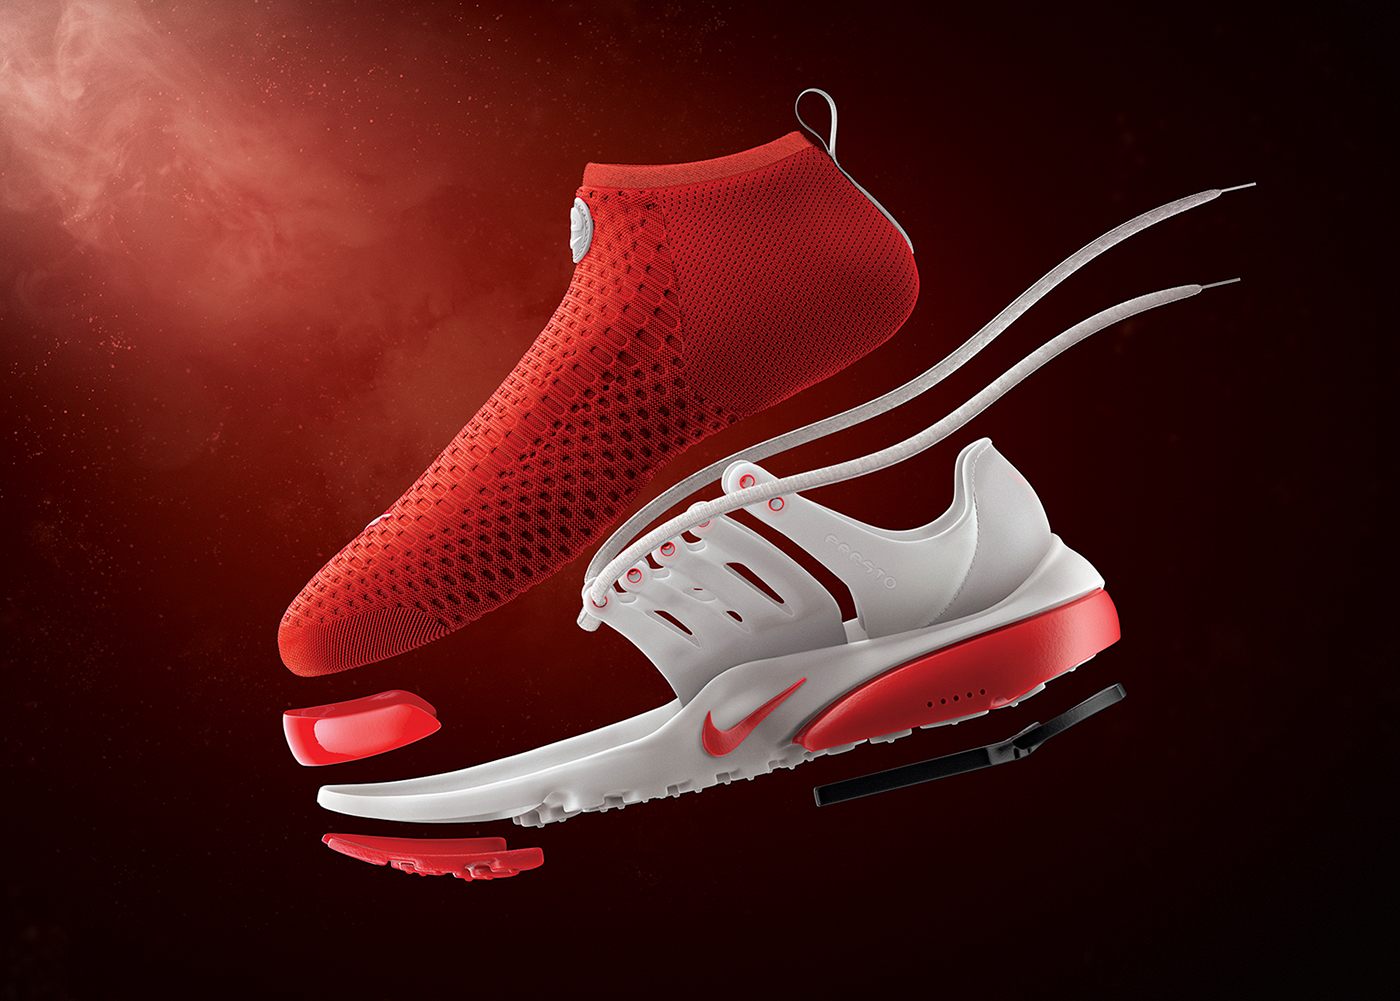 Nike Nike Presto CGI 3D shoe sport run caputo